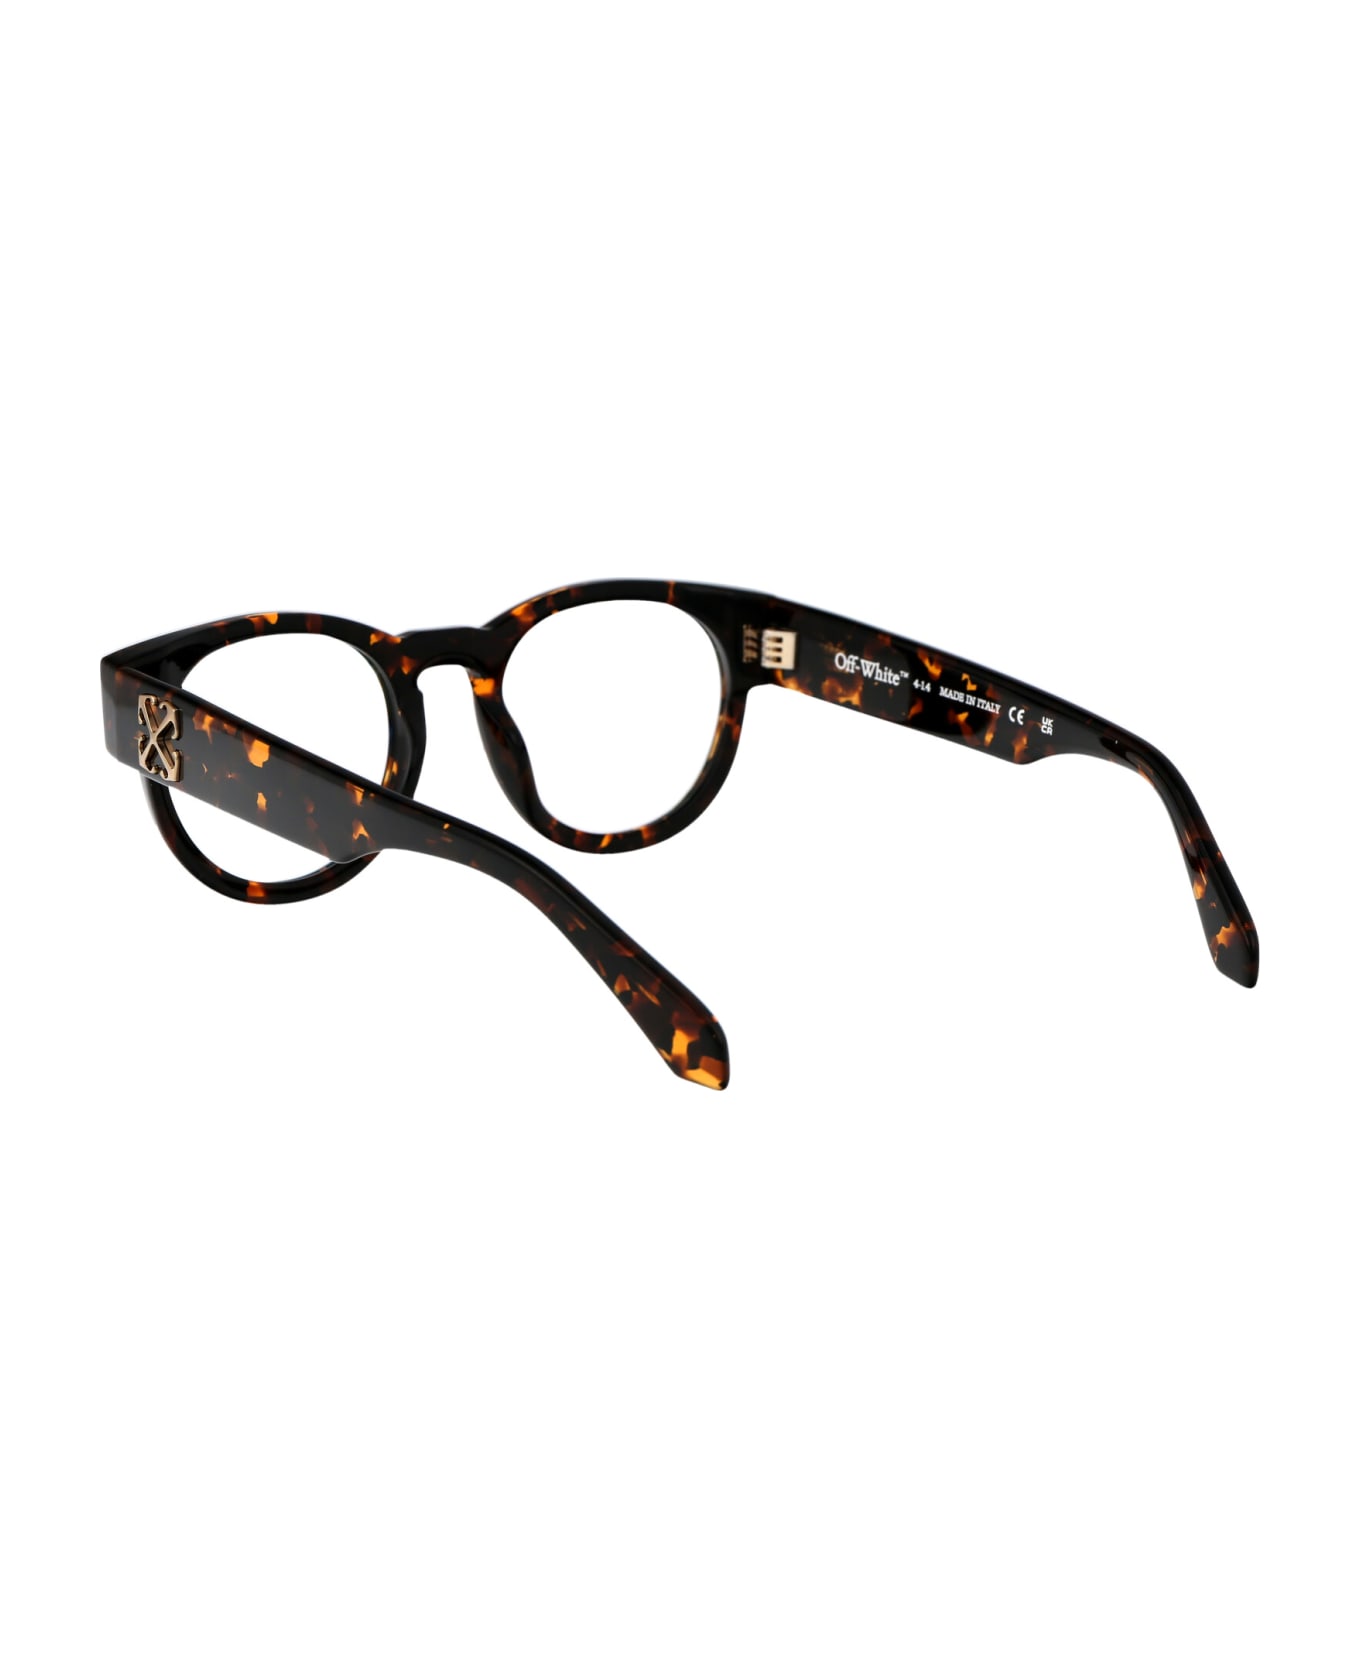 Off-White Optical Style 58 Glasses - 6000 HAVANA アイウェア